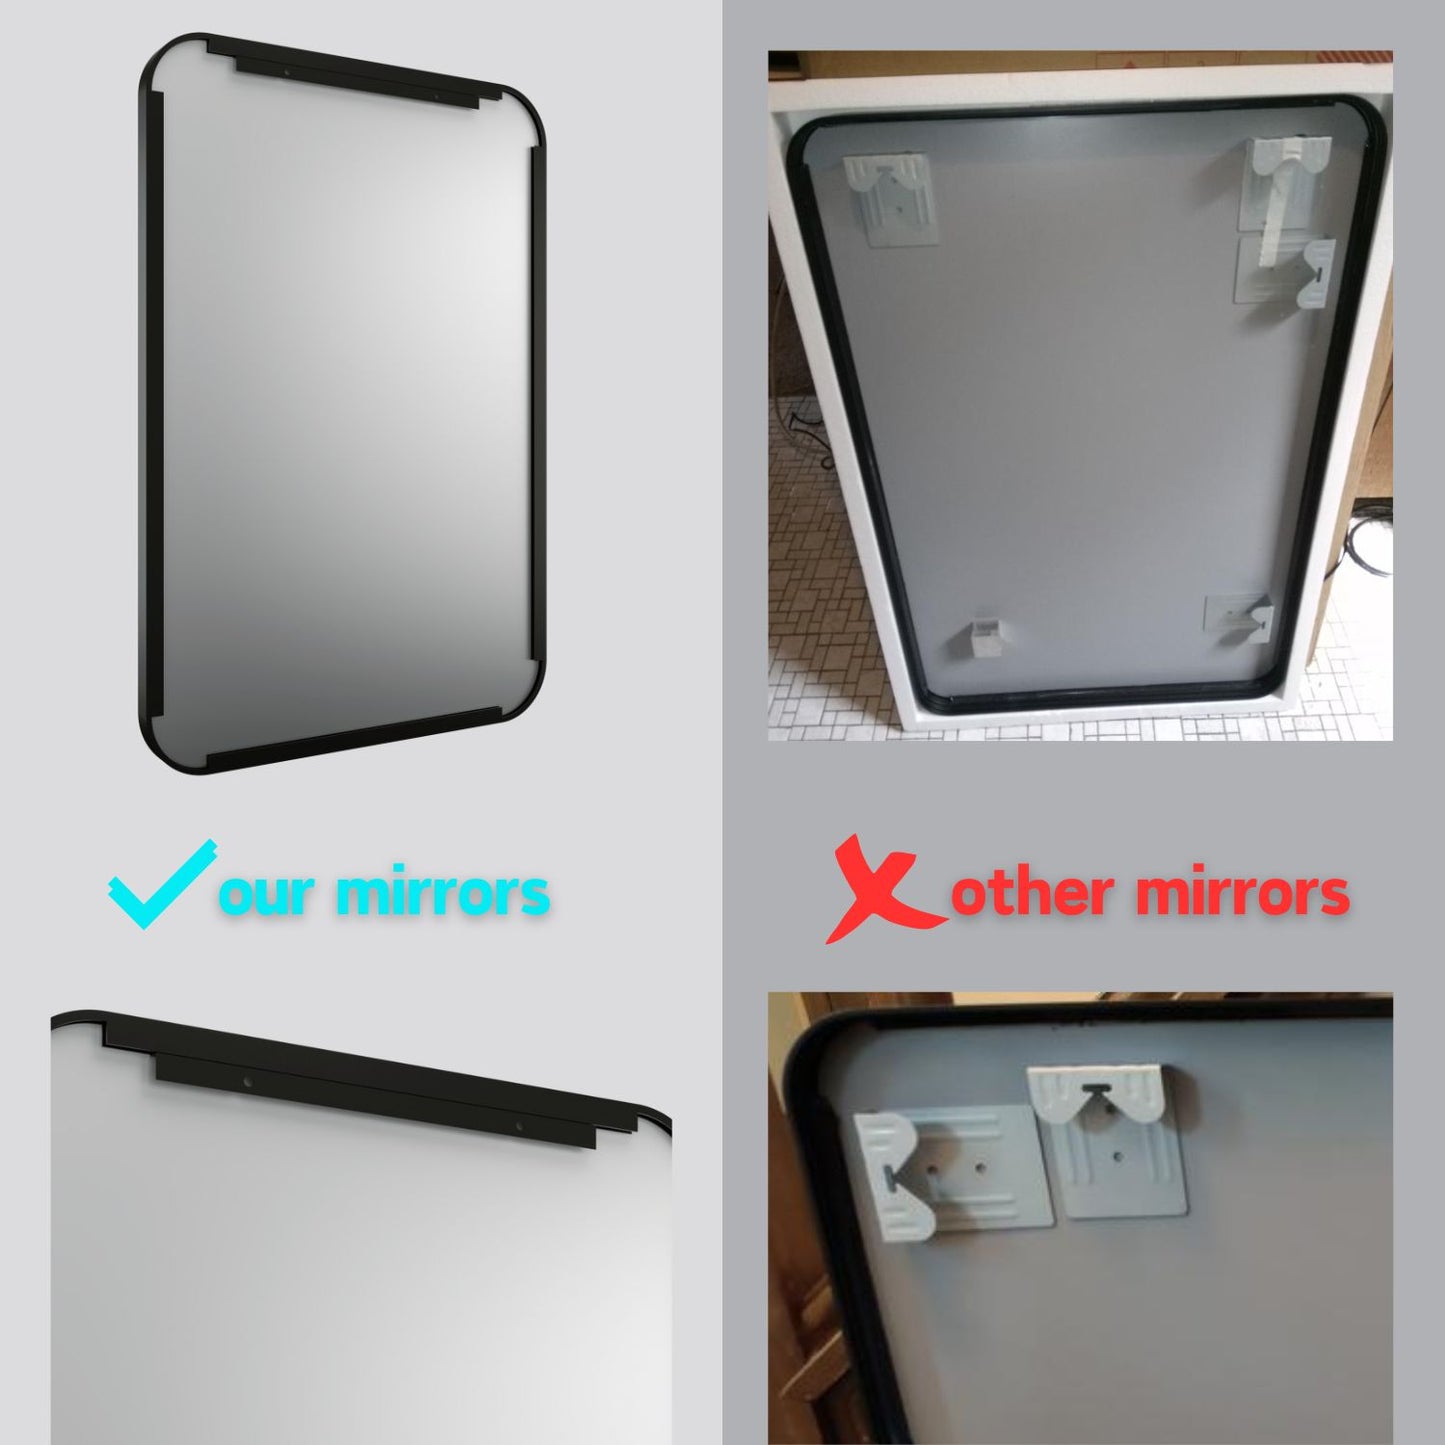 Waterpar® 48 in. W x 36 in. H Rectangular Aluminum Framed Wall Bathroom Vanity Mirror